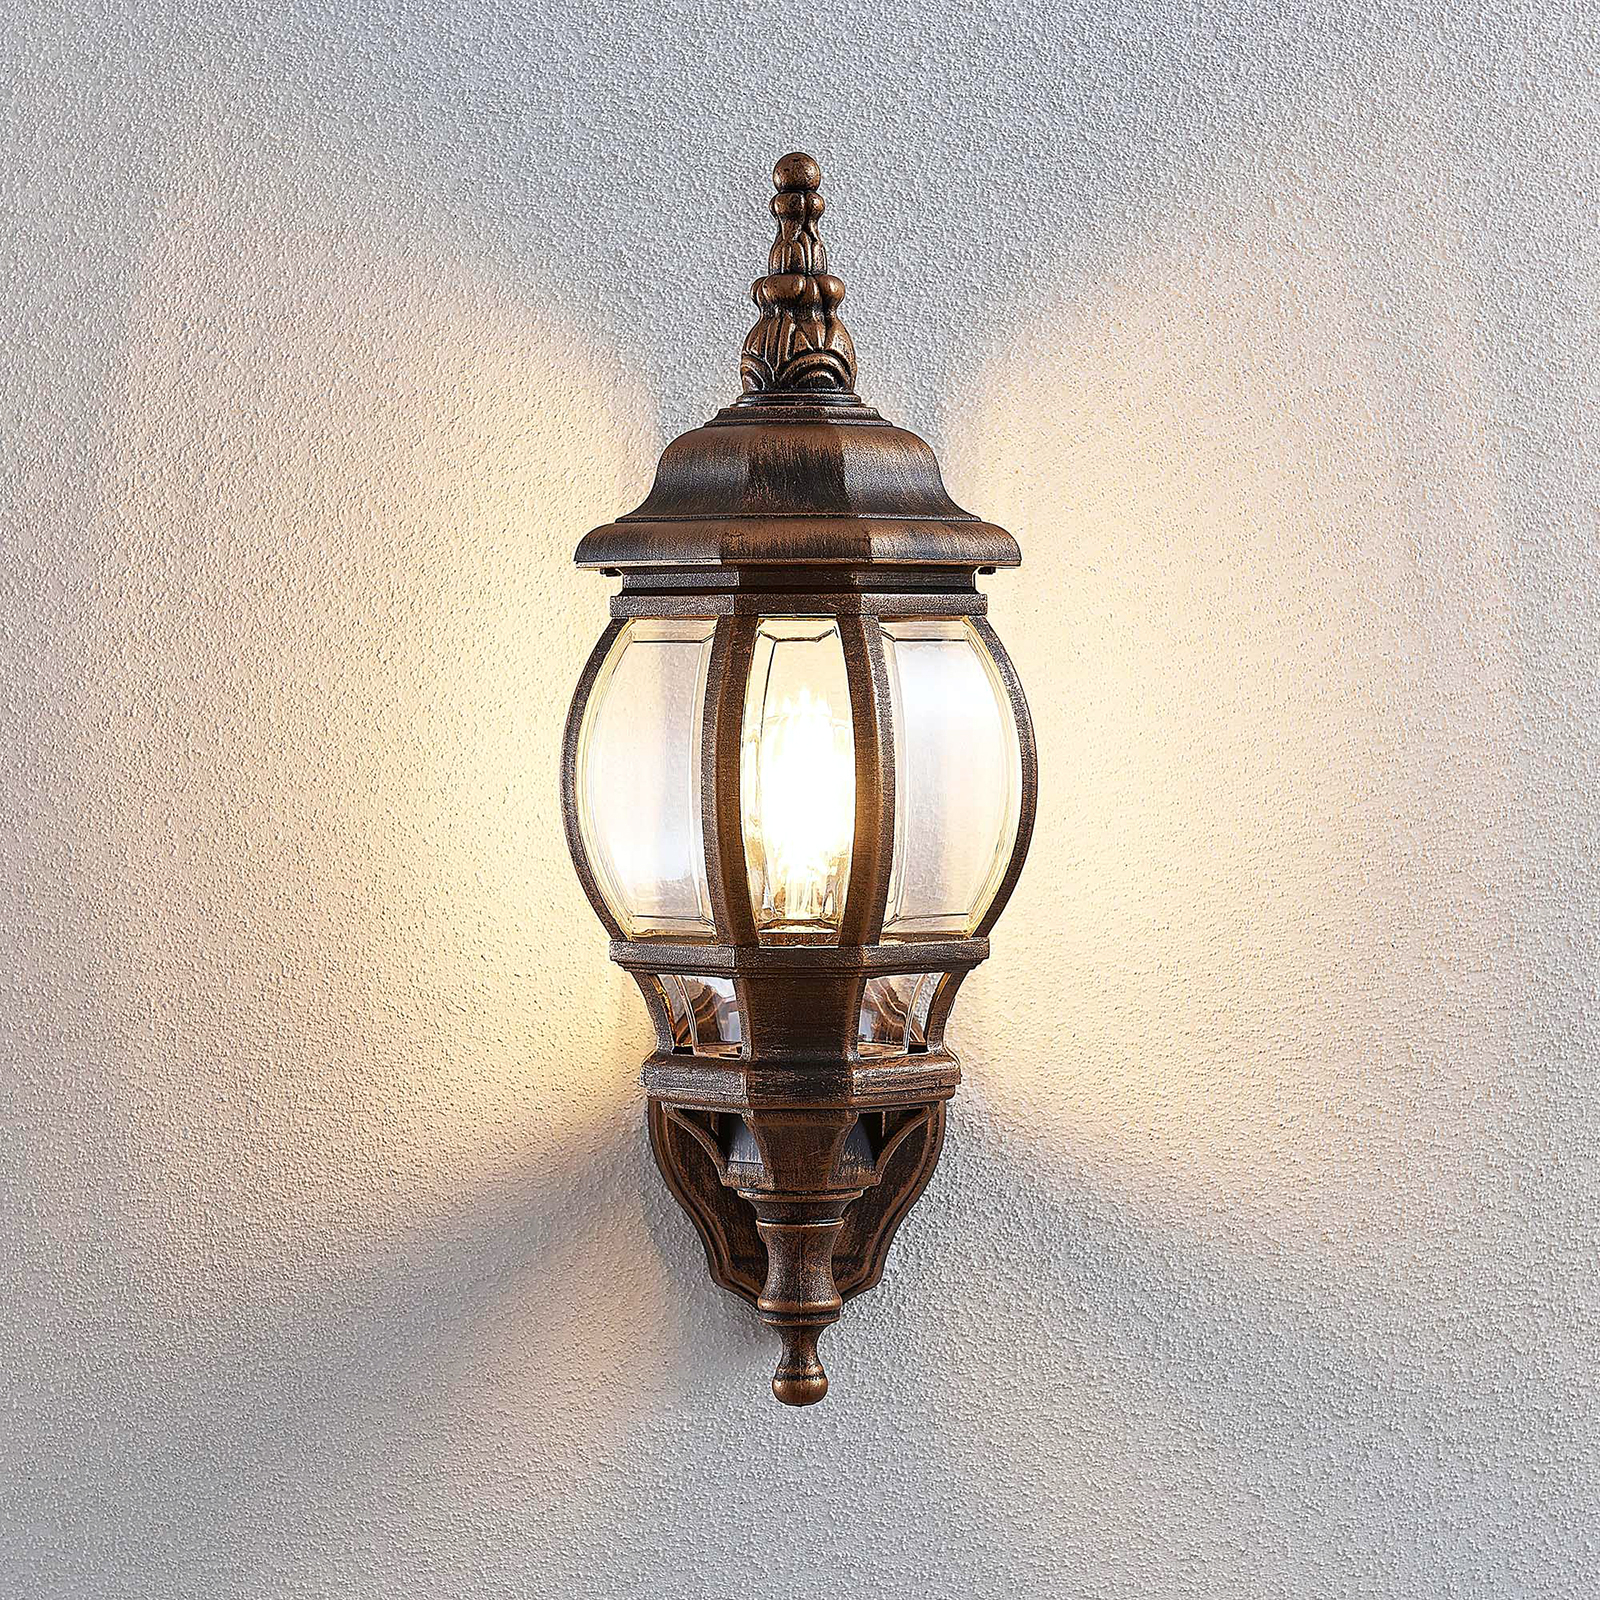 Wegelampe Nadesha Gold Antik Orientalisch Pollerleuchte Lampenwelt E27 IK06 